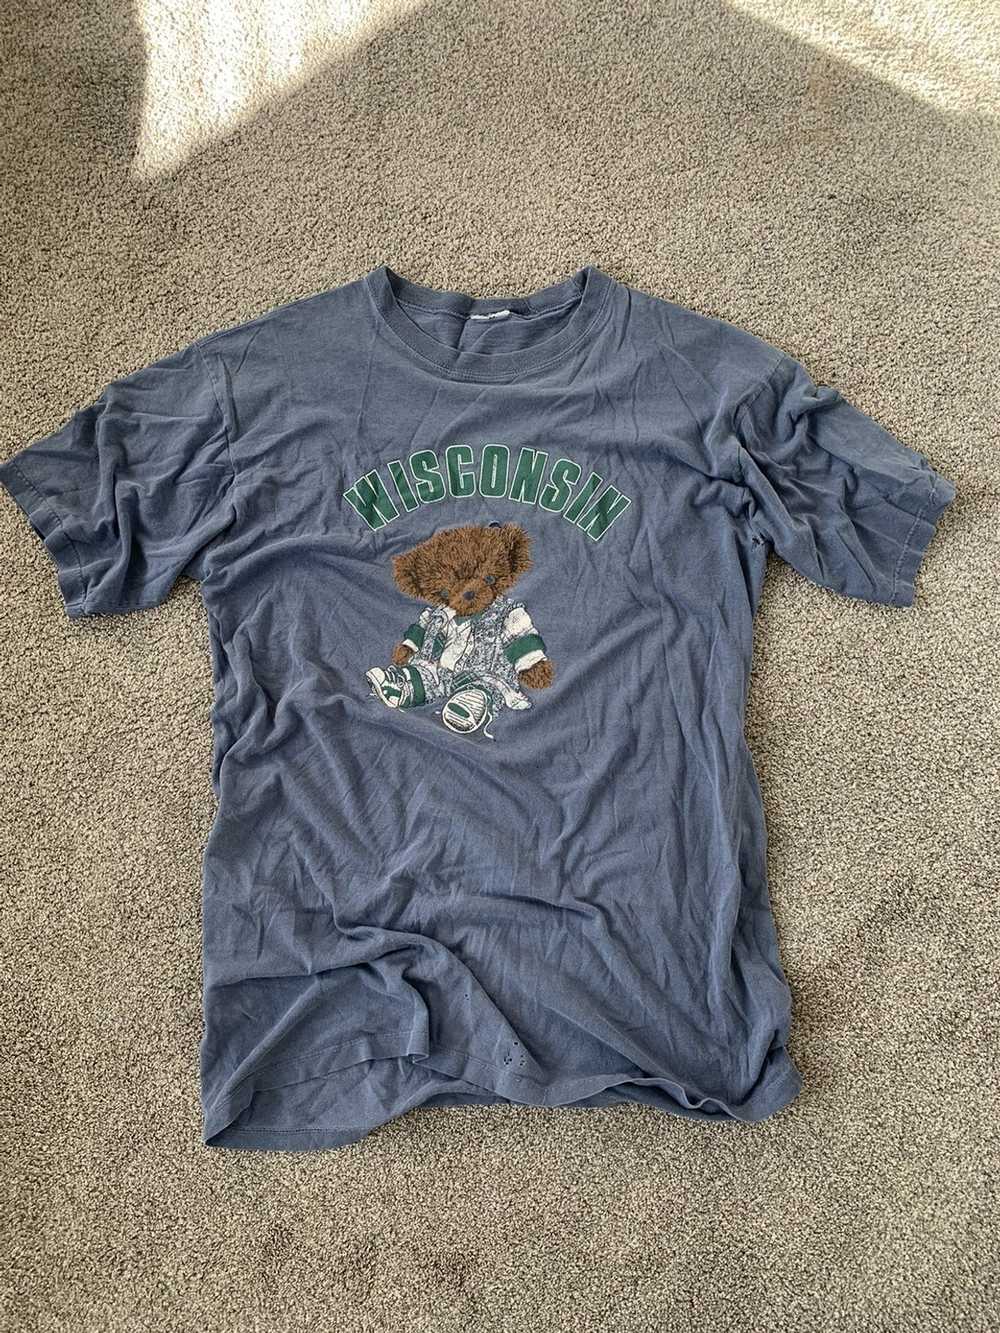 Vintage Vintage Wisconsin Teddy Bear T shirt - image 1